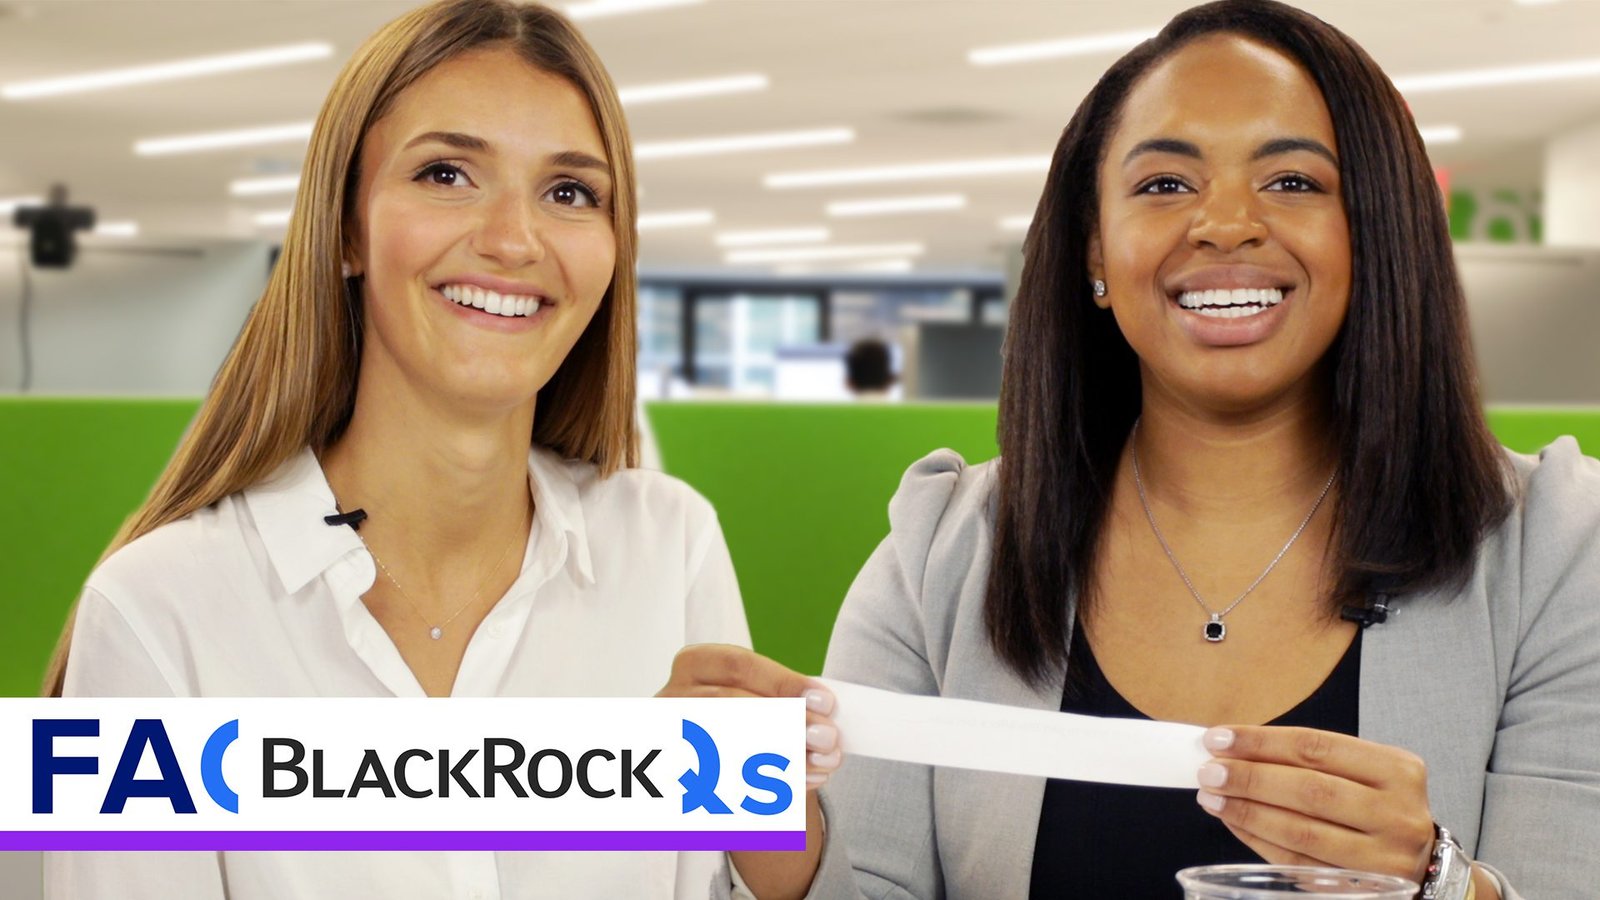 BlackRock FAQs #BlackRock #FAQs